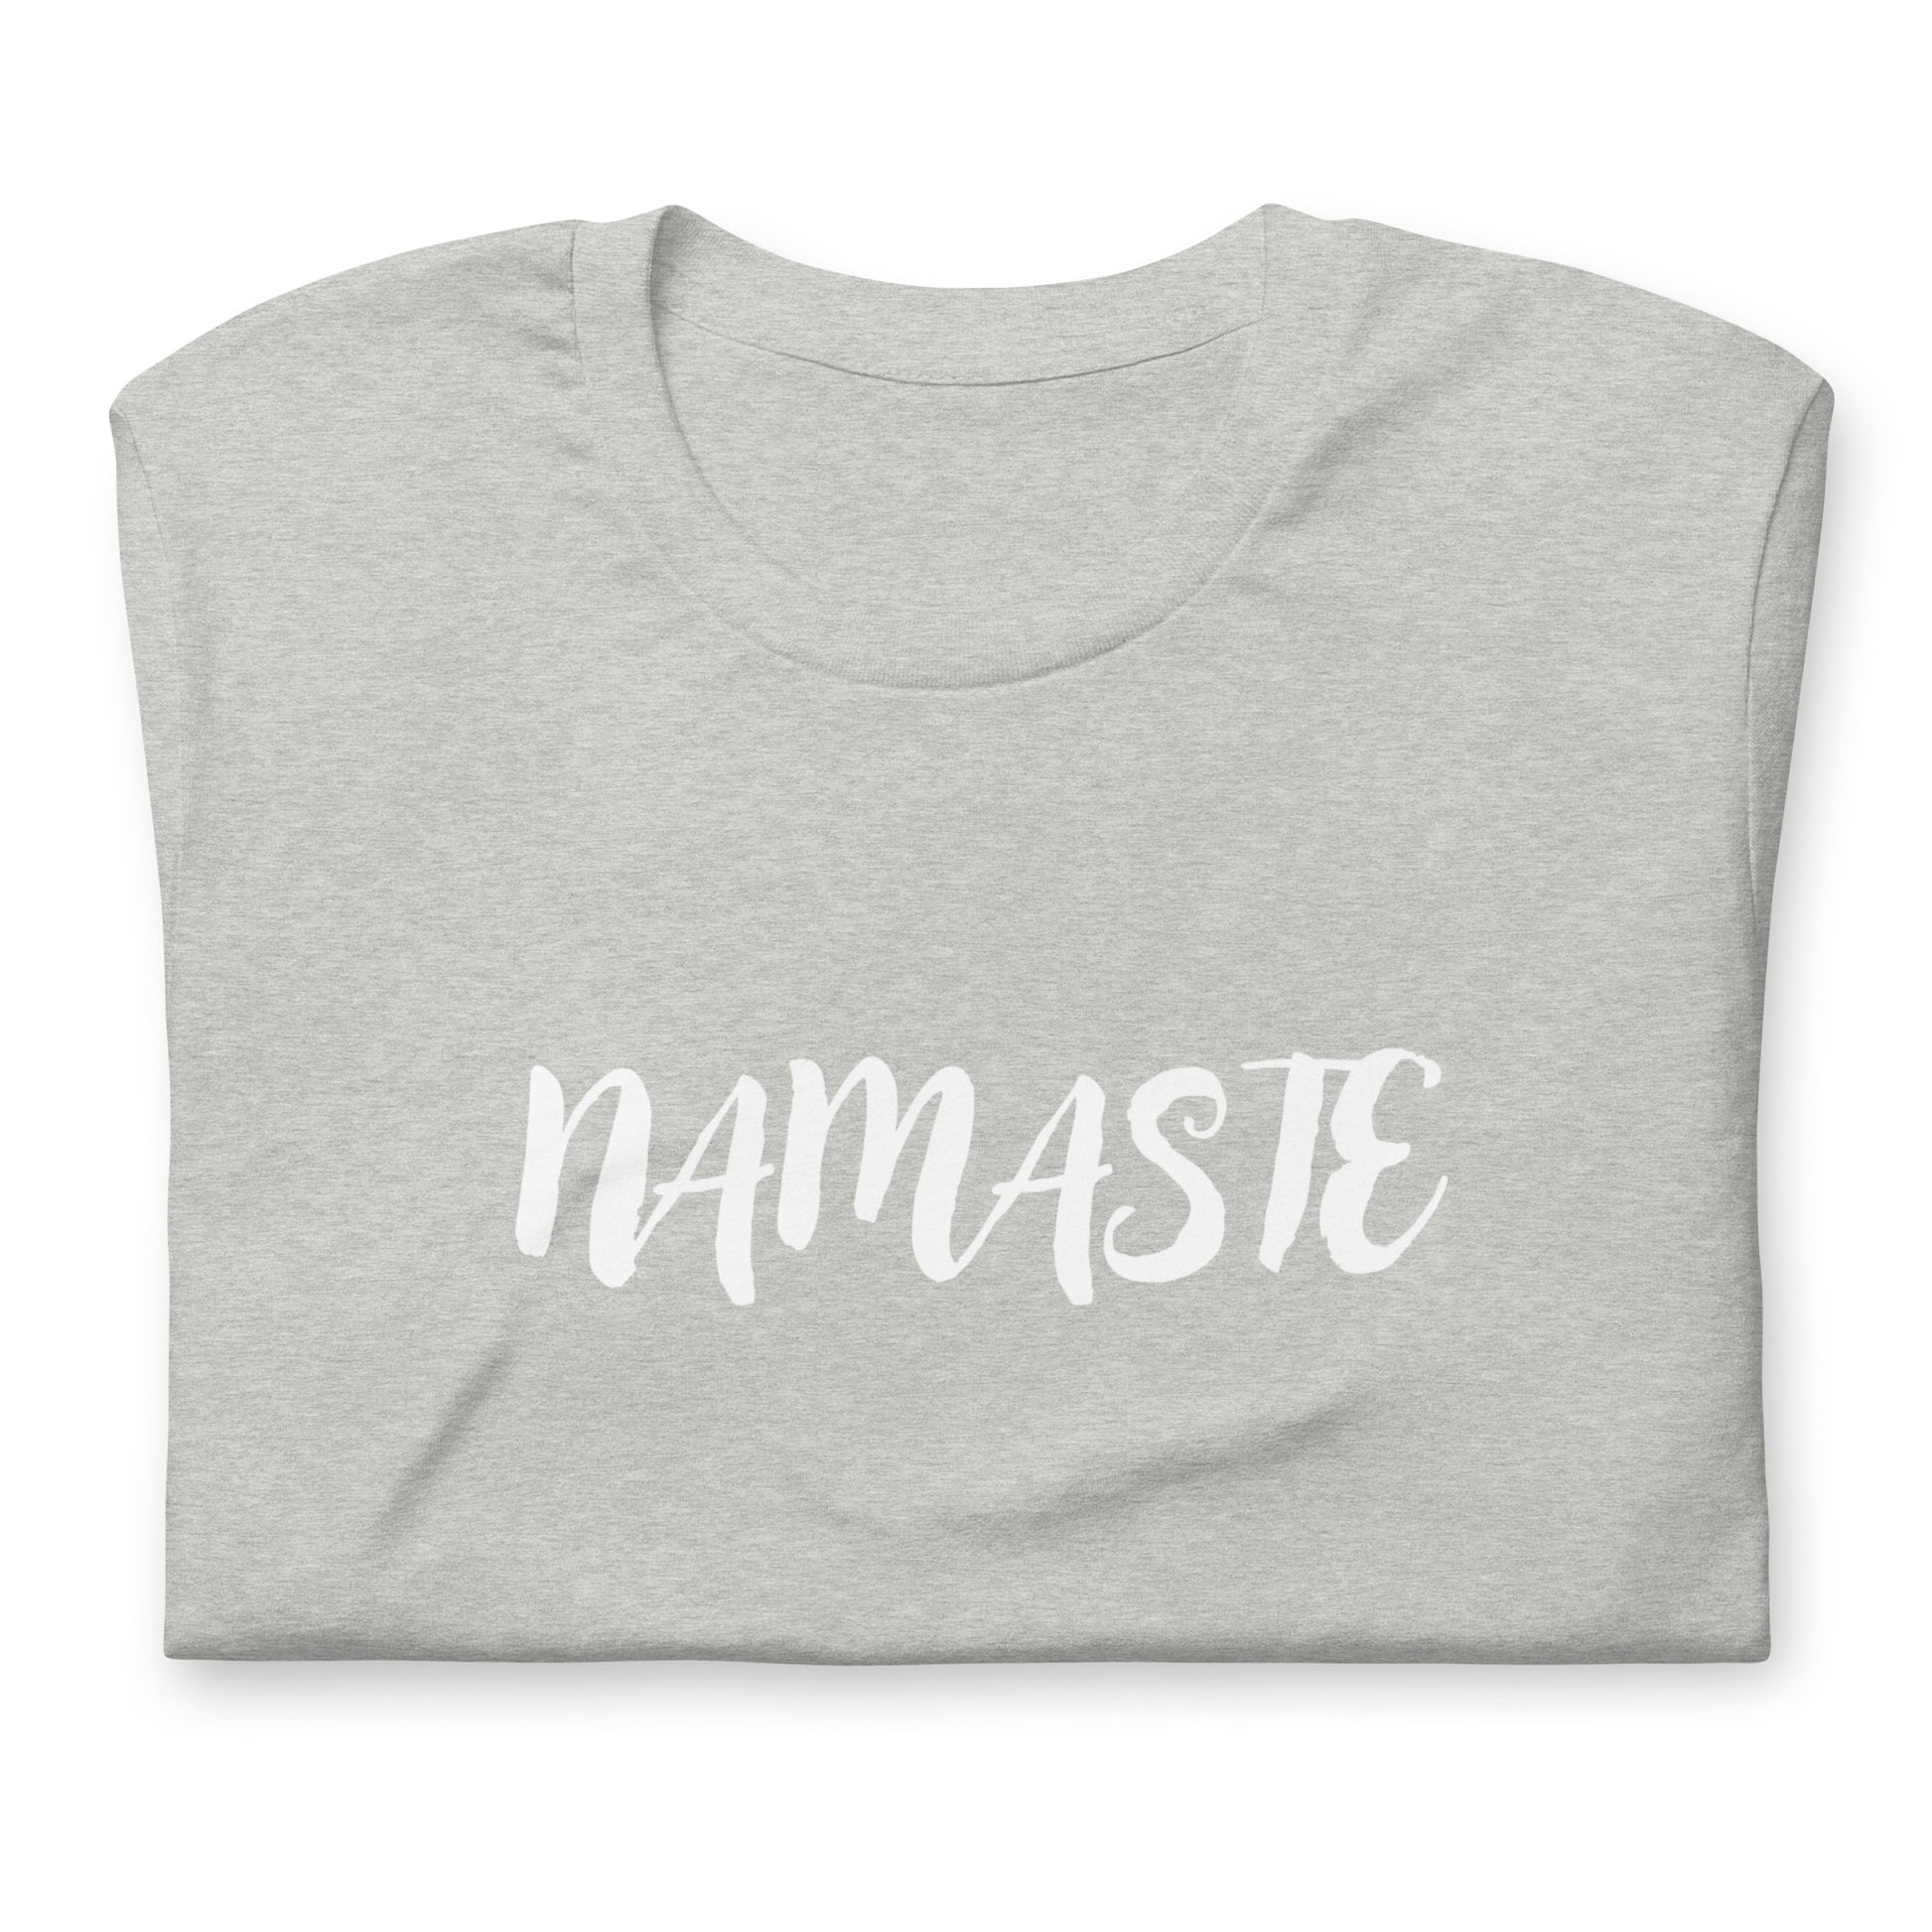 But First Yoga Tshirt Yoga T Shirt Yoga Shirt Yoga Tee Yoga Top Meditation  Shirt, Yoga Namaste Tee, Yoga Tshirts Yoga Gifts, Gifts for Yoga -   Canada